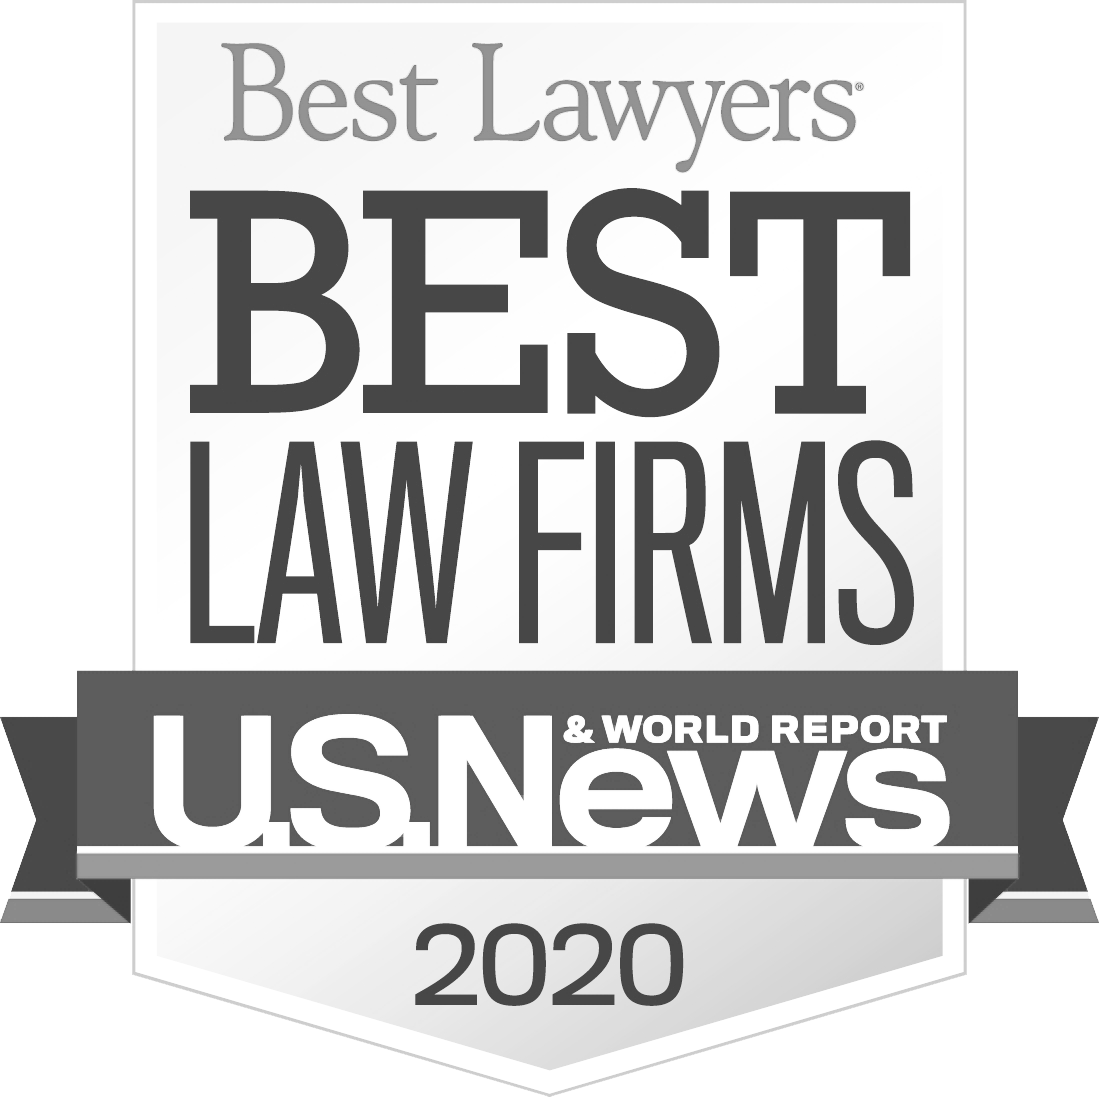 Best Lawyers - Best Law Firms U.S. News